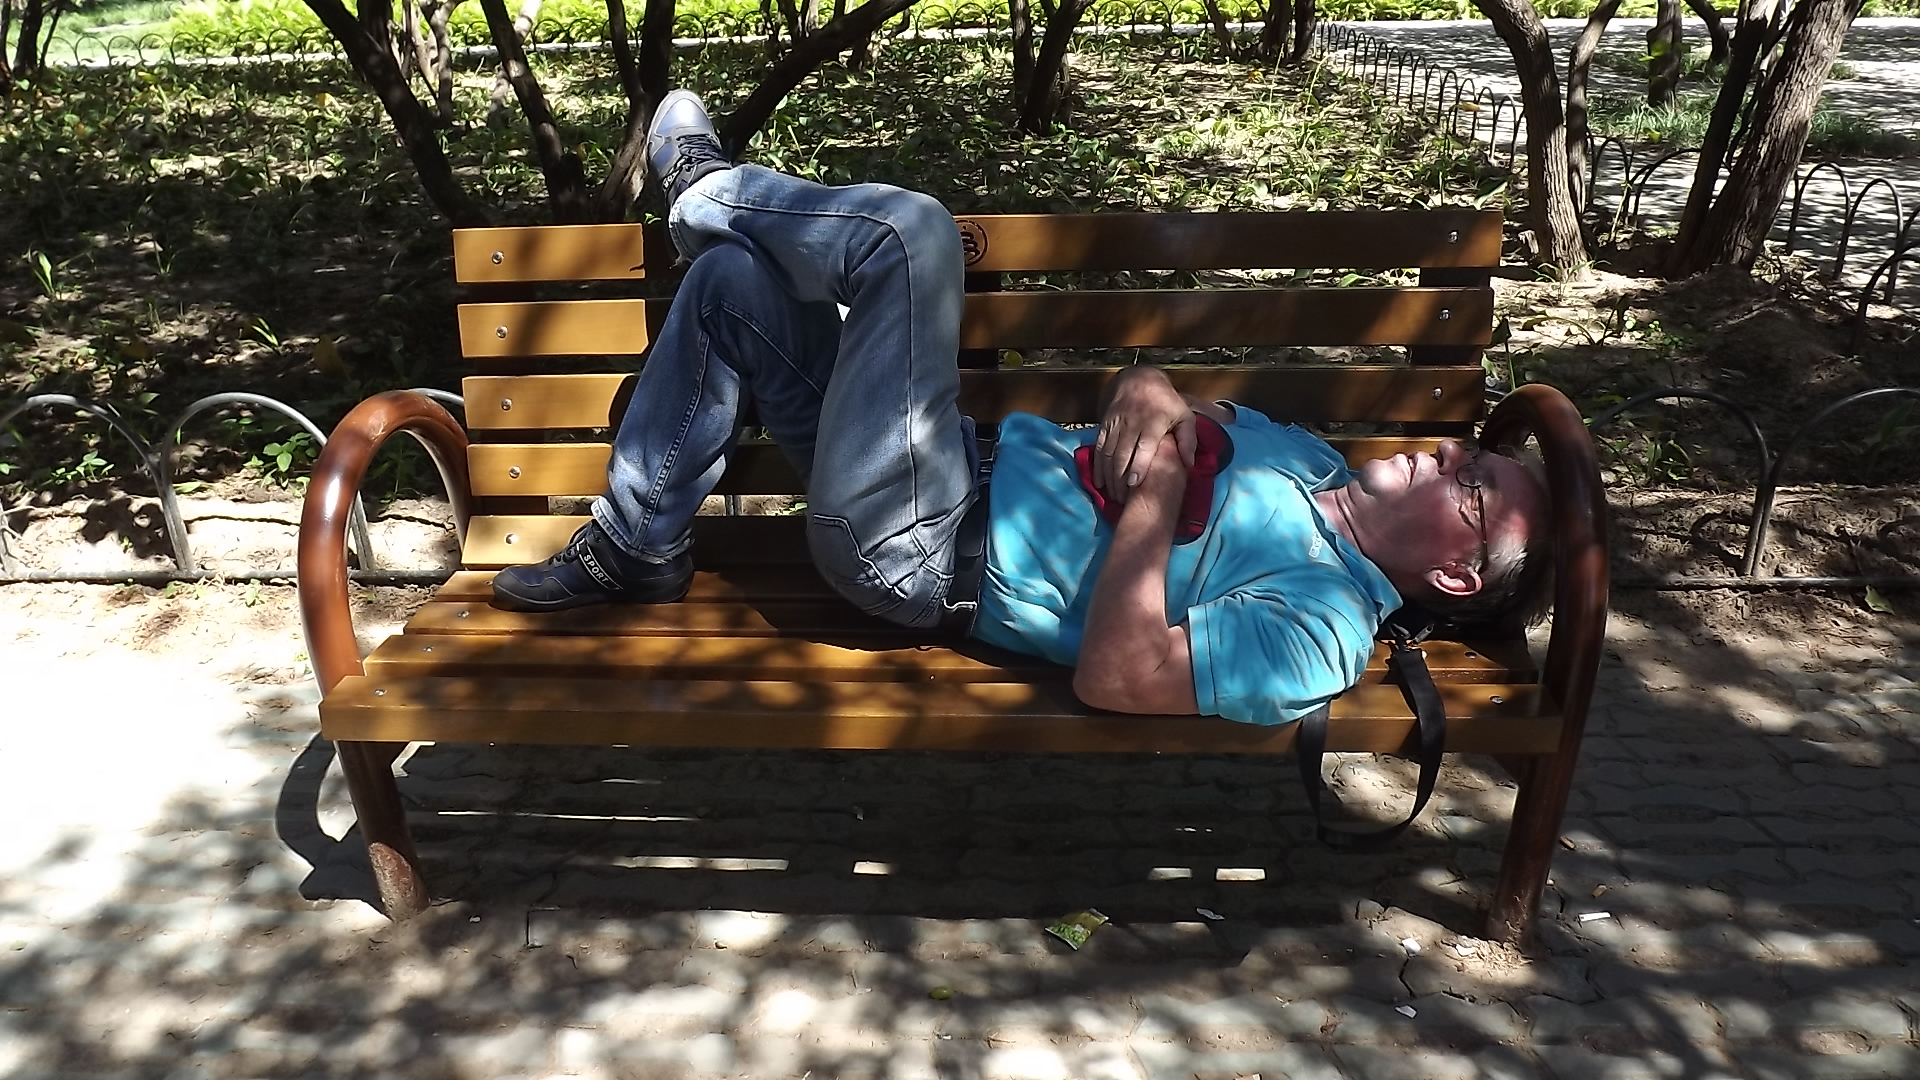 Taking a nap Heavenly Temple Garden